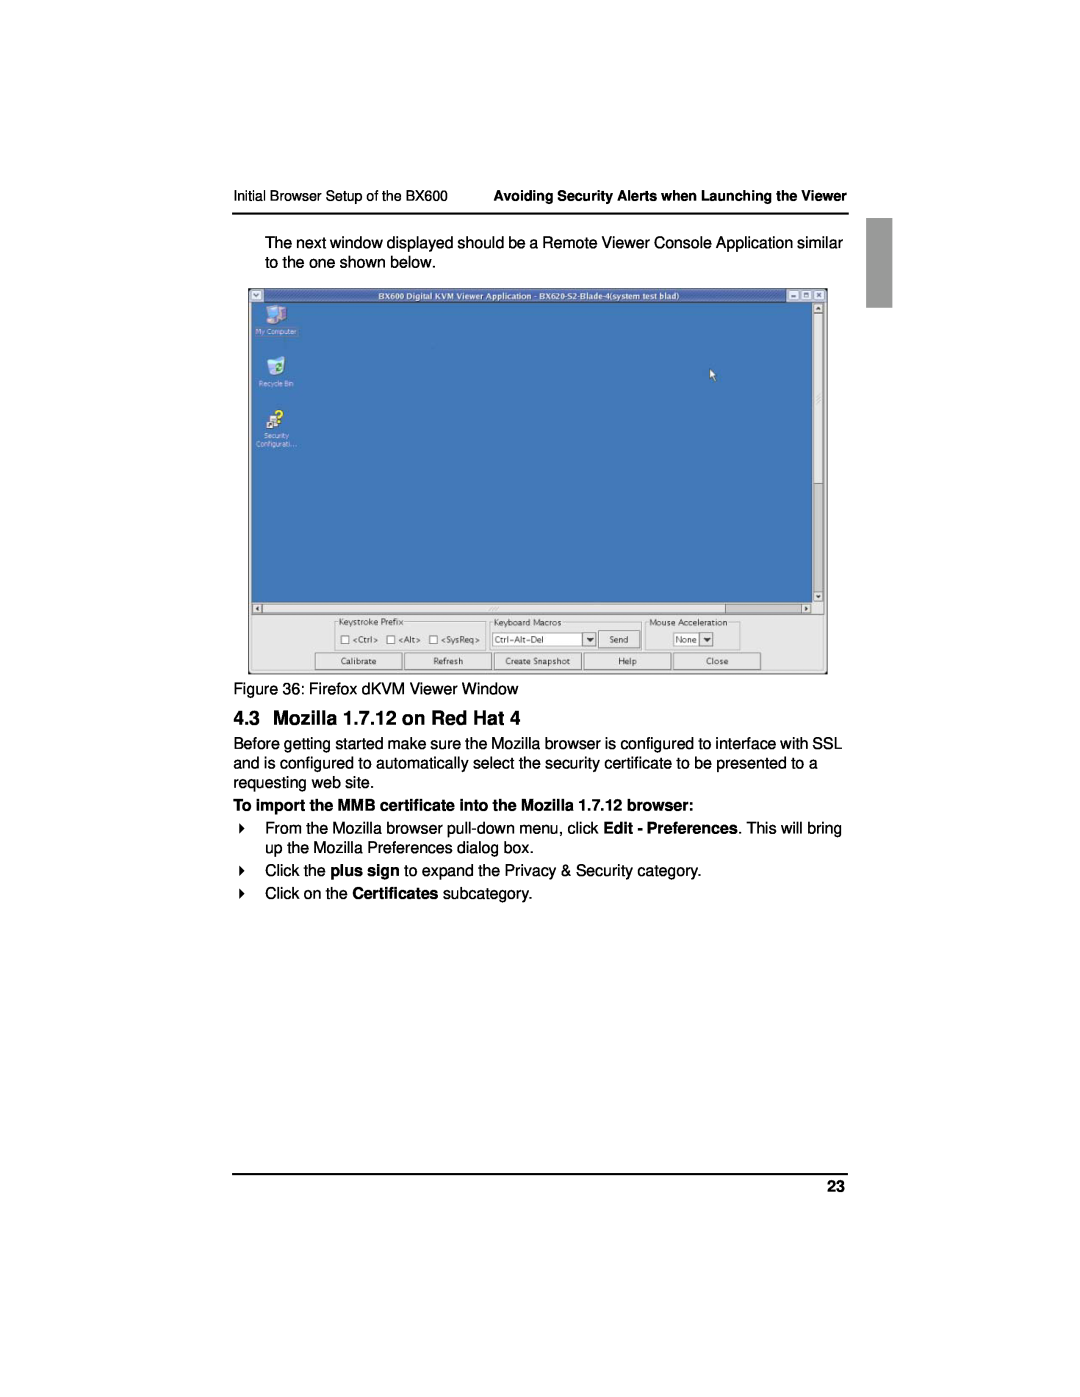 Fujitsu BX600 manual Mozilla 1.7.12 on Red Hat 